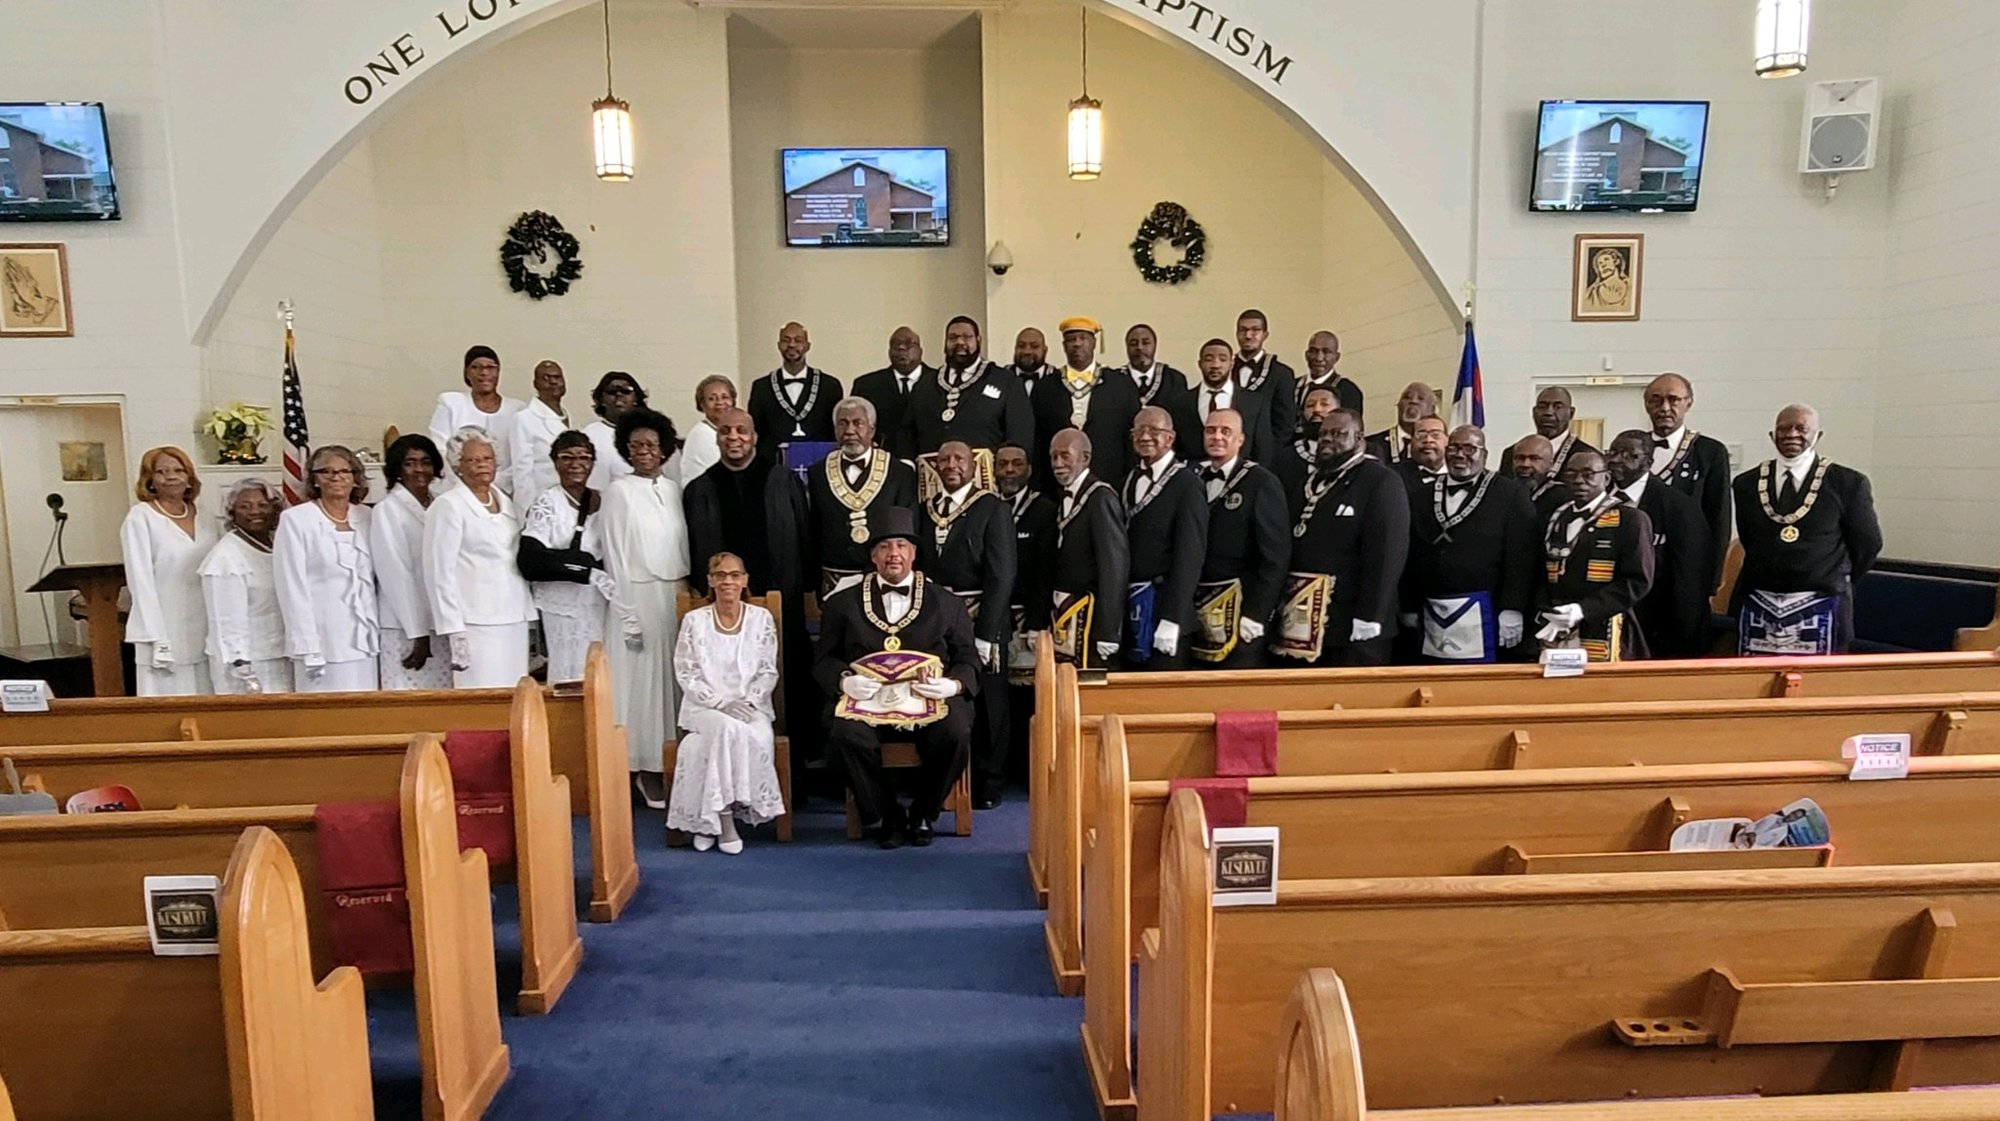 South Carolina/U.S. - Ninth Masonic District marks St. John's Day with service in Kingstree